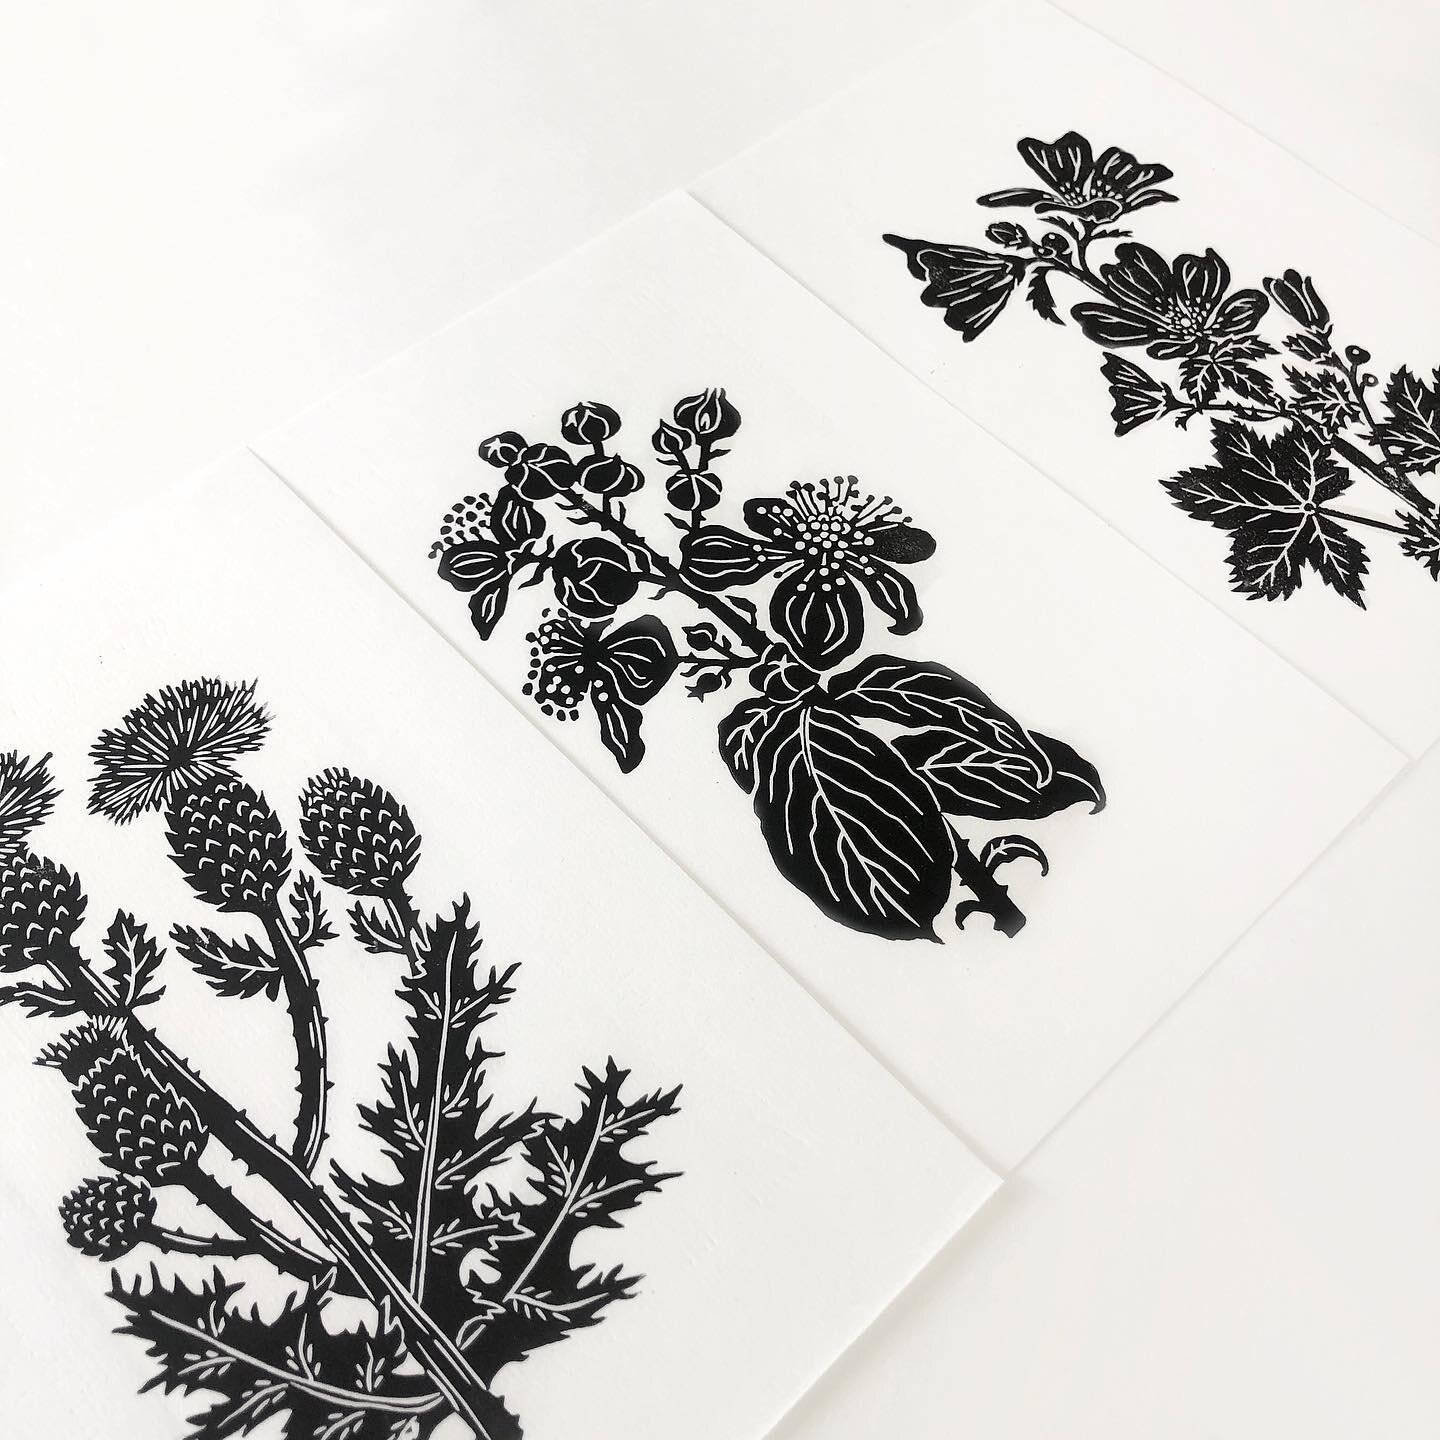 I printed the remaining 2 prints yesterday at @lawrenceprintmaking that make up this little trio of botanical linocuts 

@lawrence_art_studio #printprocess #lino #linoprintmaking #linocut #newprint #blockprint #printmaking #printmakinguk #handcarved 